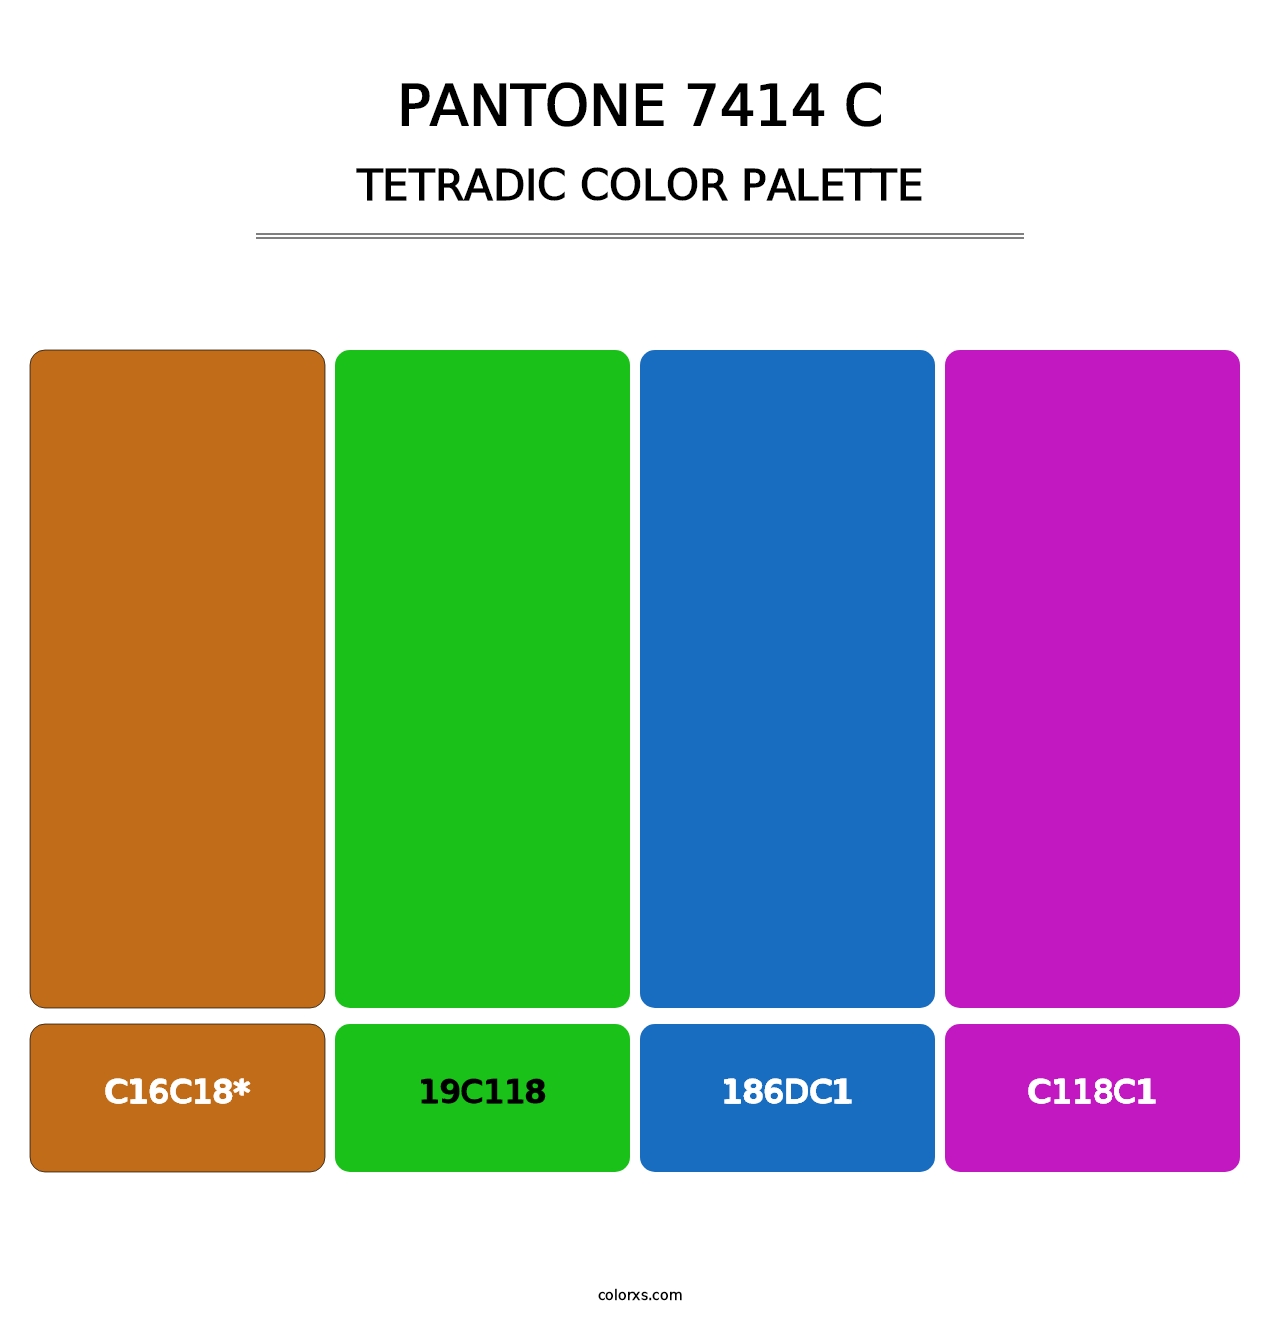 PANTONE 7414 C - Tetradic Color Palette